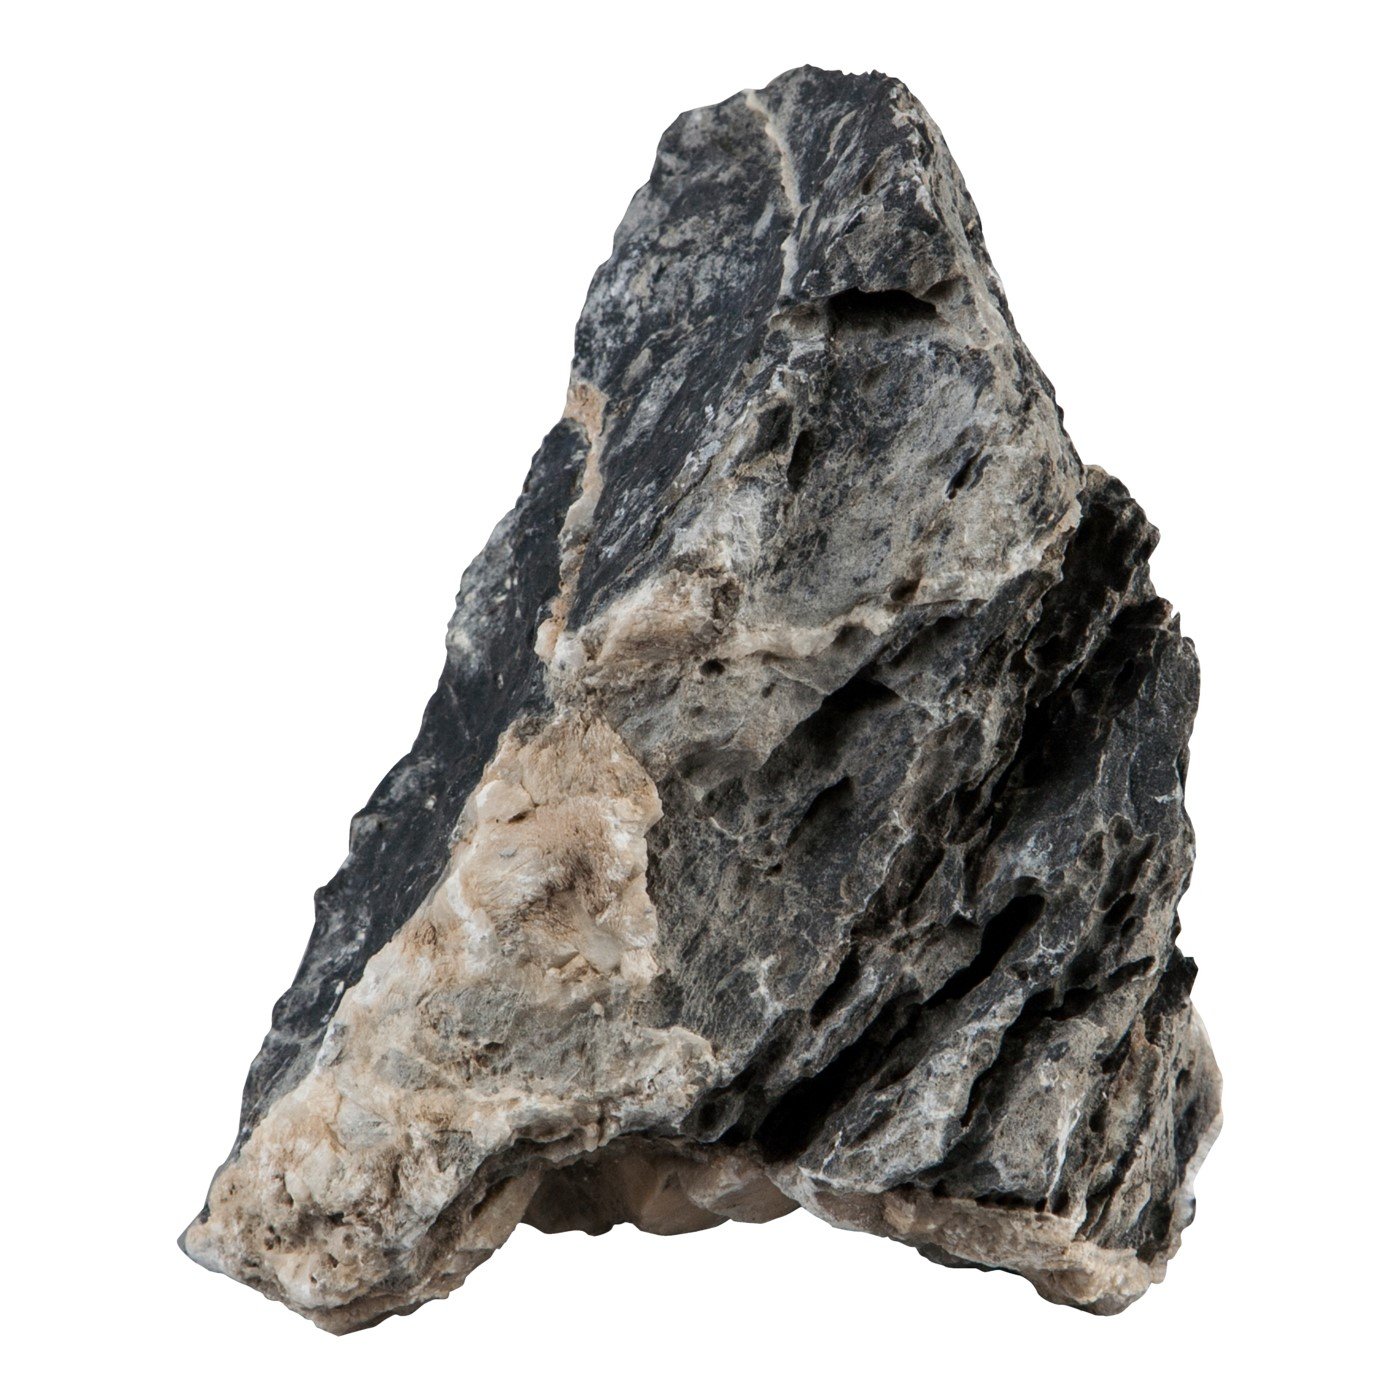 Sera Rock Quartz Gray Grauer Naturstein für Aquascaping